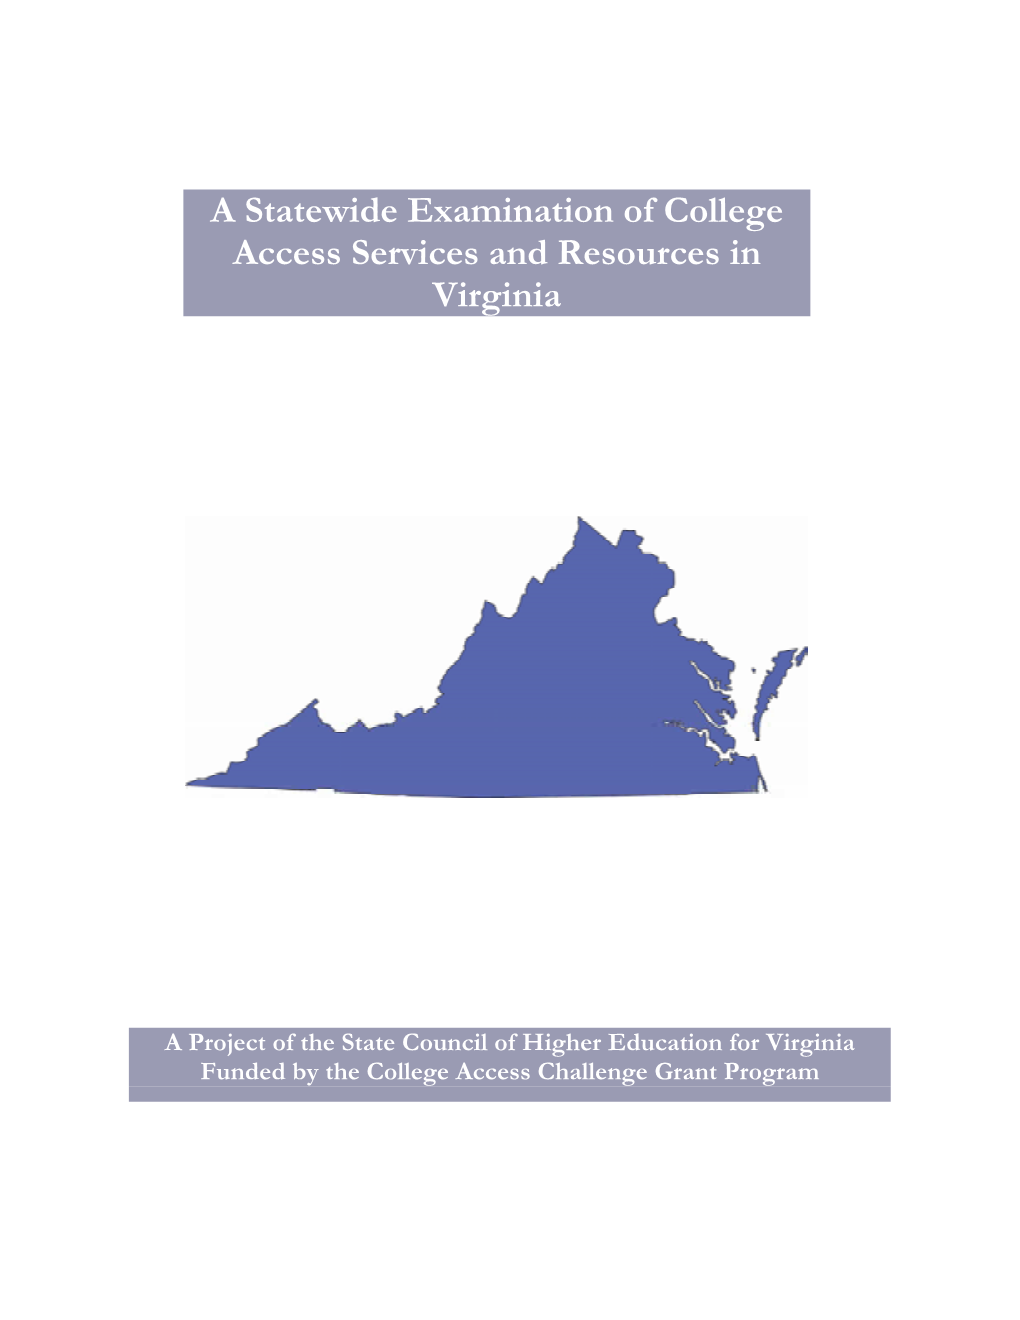 College Access in Virginia